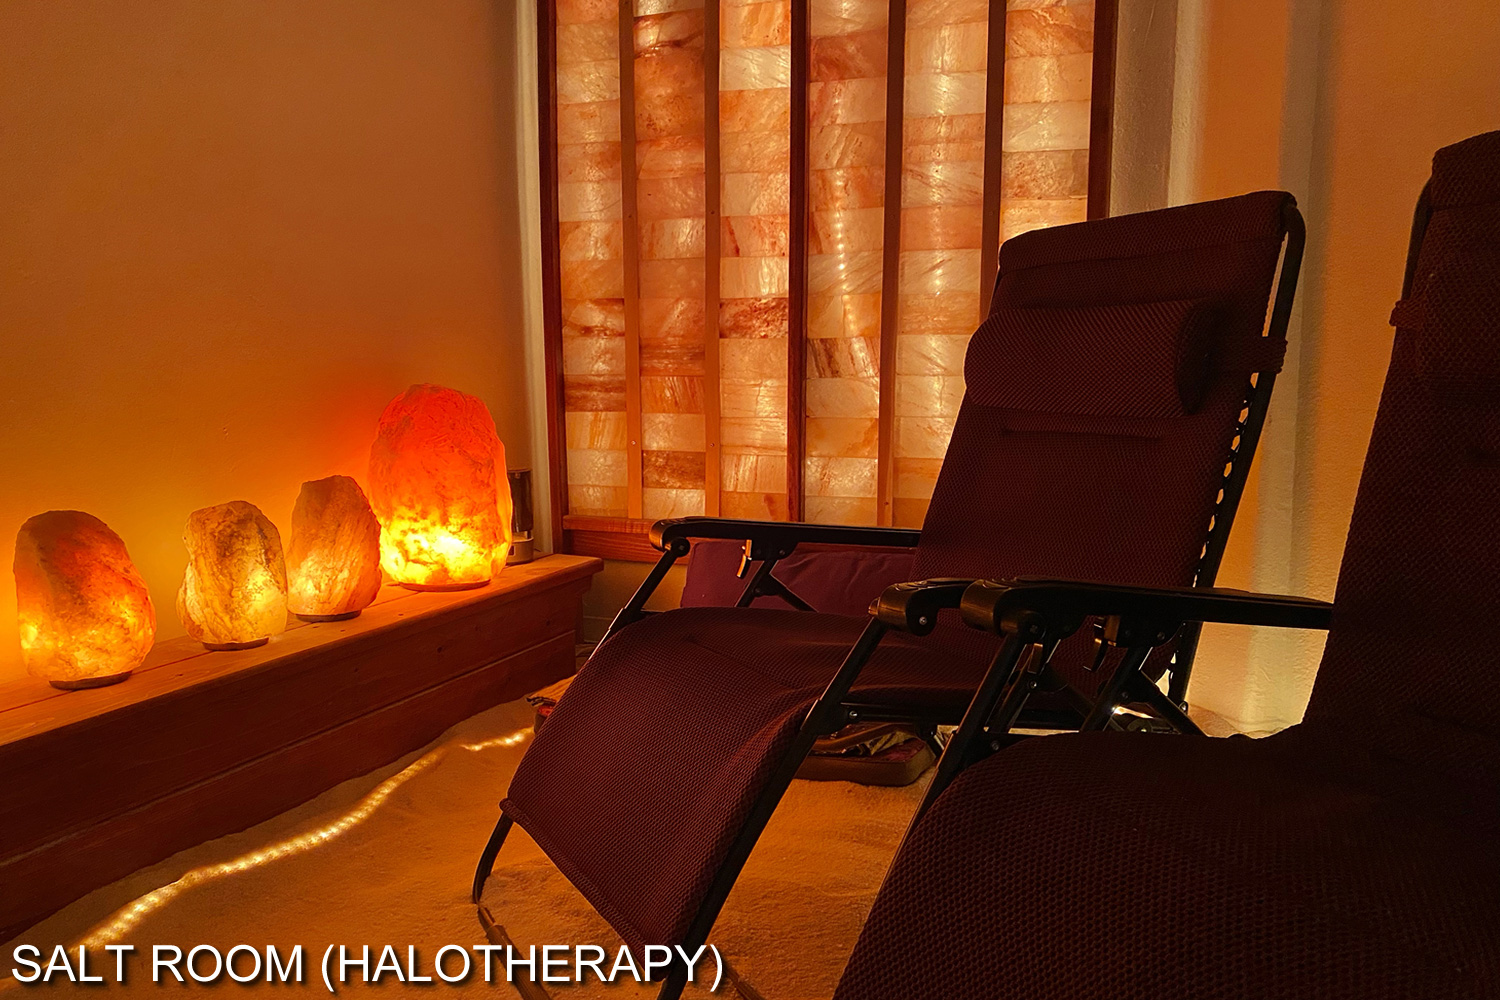 Salt room halotherapy at Sacred Elements of Sedona